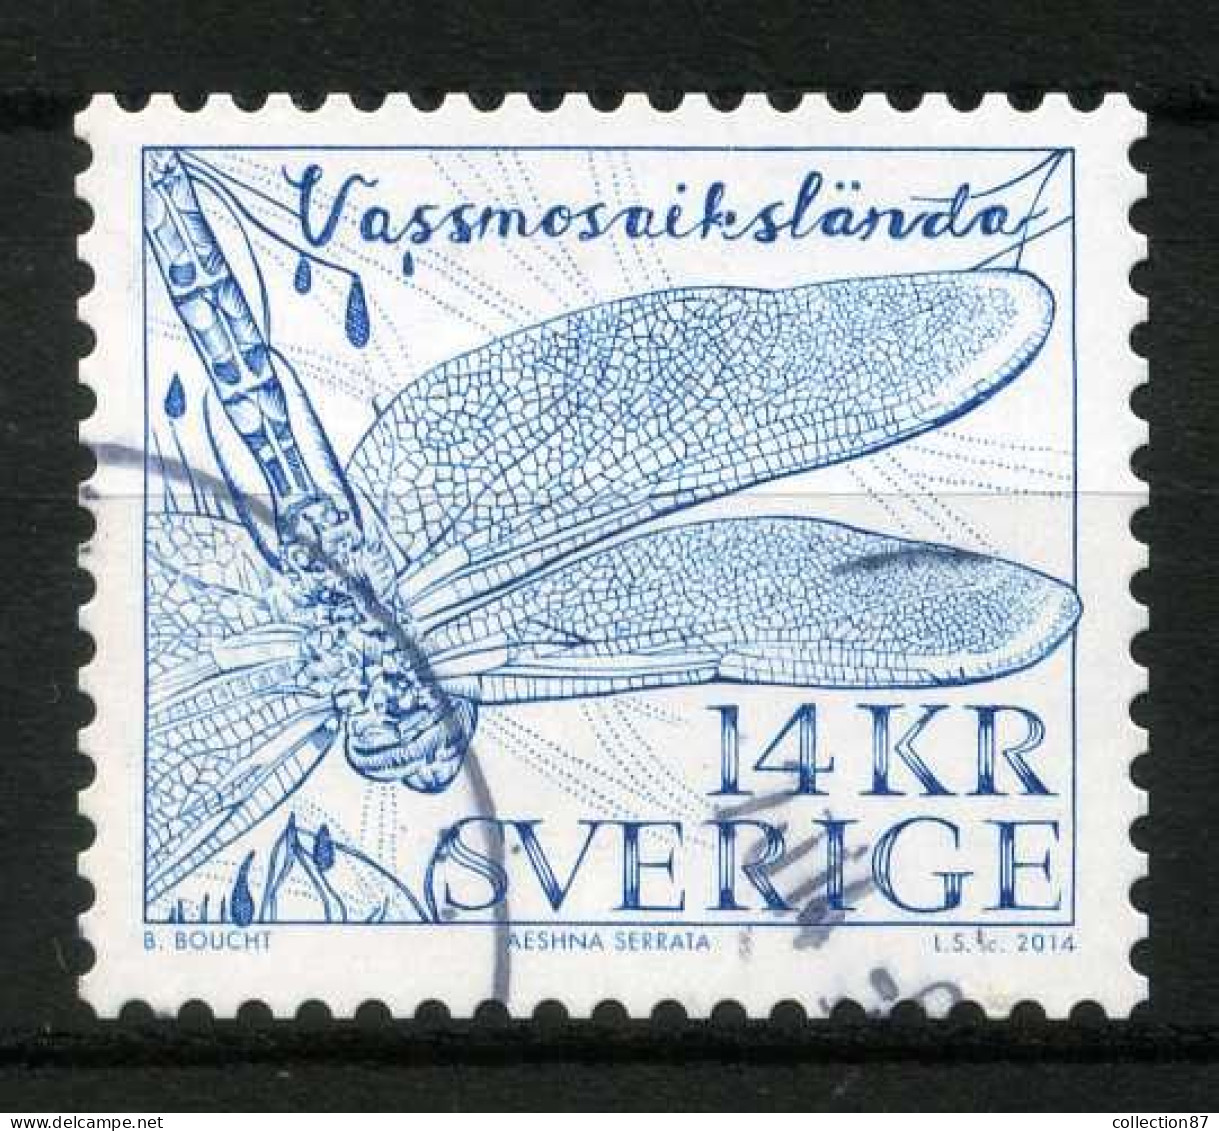 Réf 77 < -- SWEDEN 2014 < Yvert N° 2967 Ø Used -- > Insectes Aeshna Serrata - Used Stamps